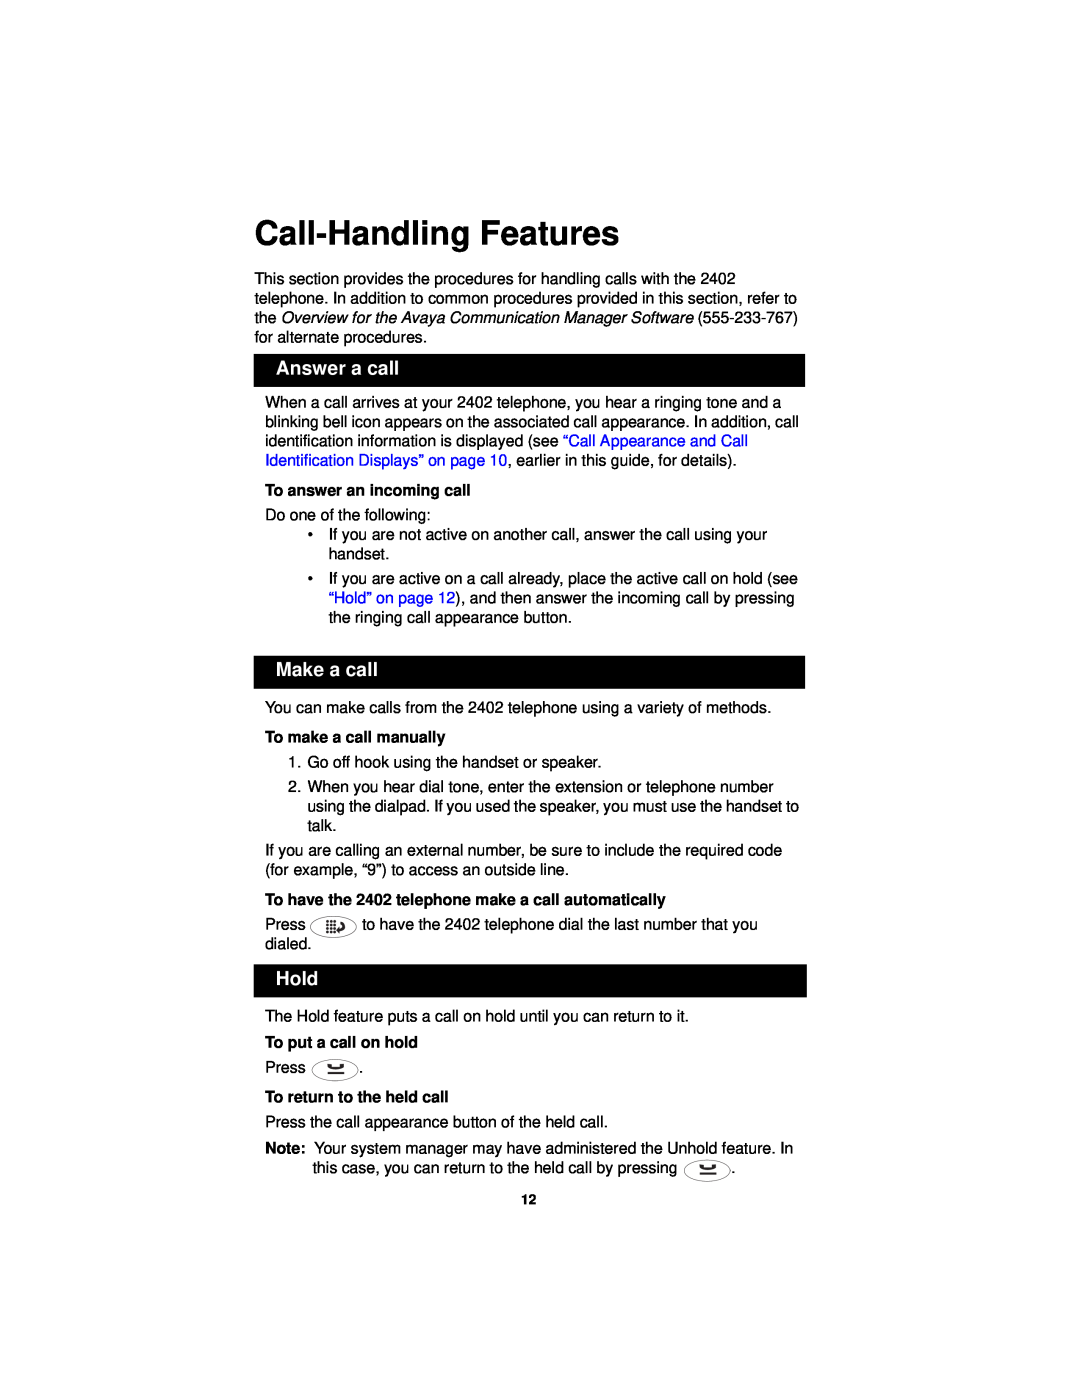 Avaya 2402 Call-Handling Features, Answer a call, Make a call, Hold, To answer an incoming call, To make a call manually 